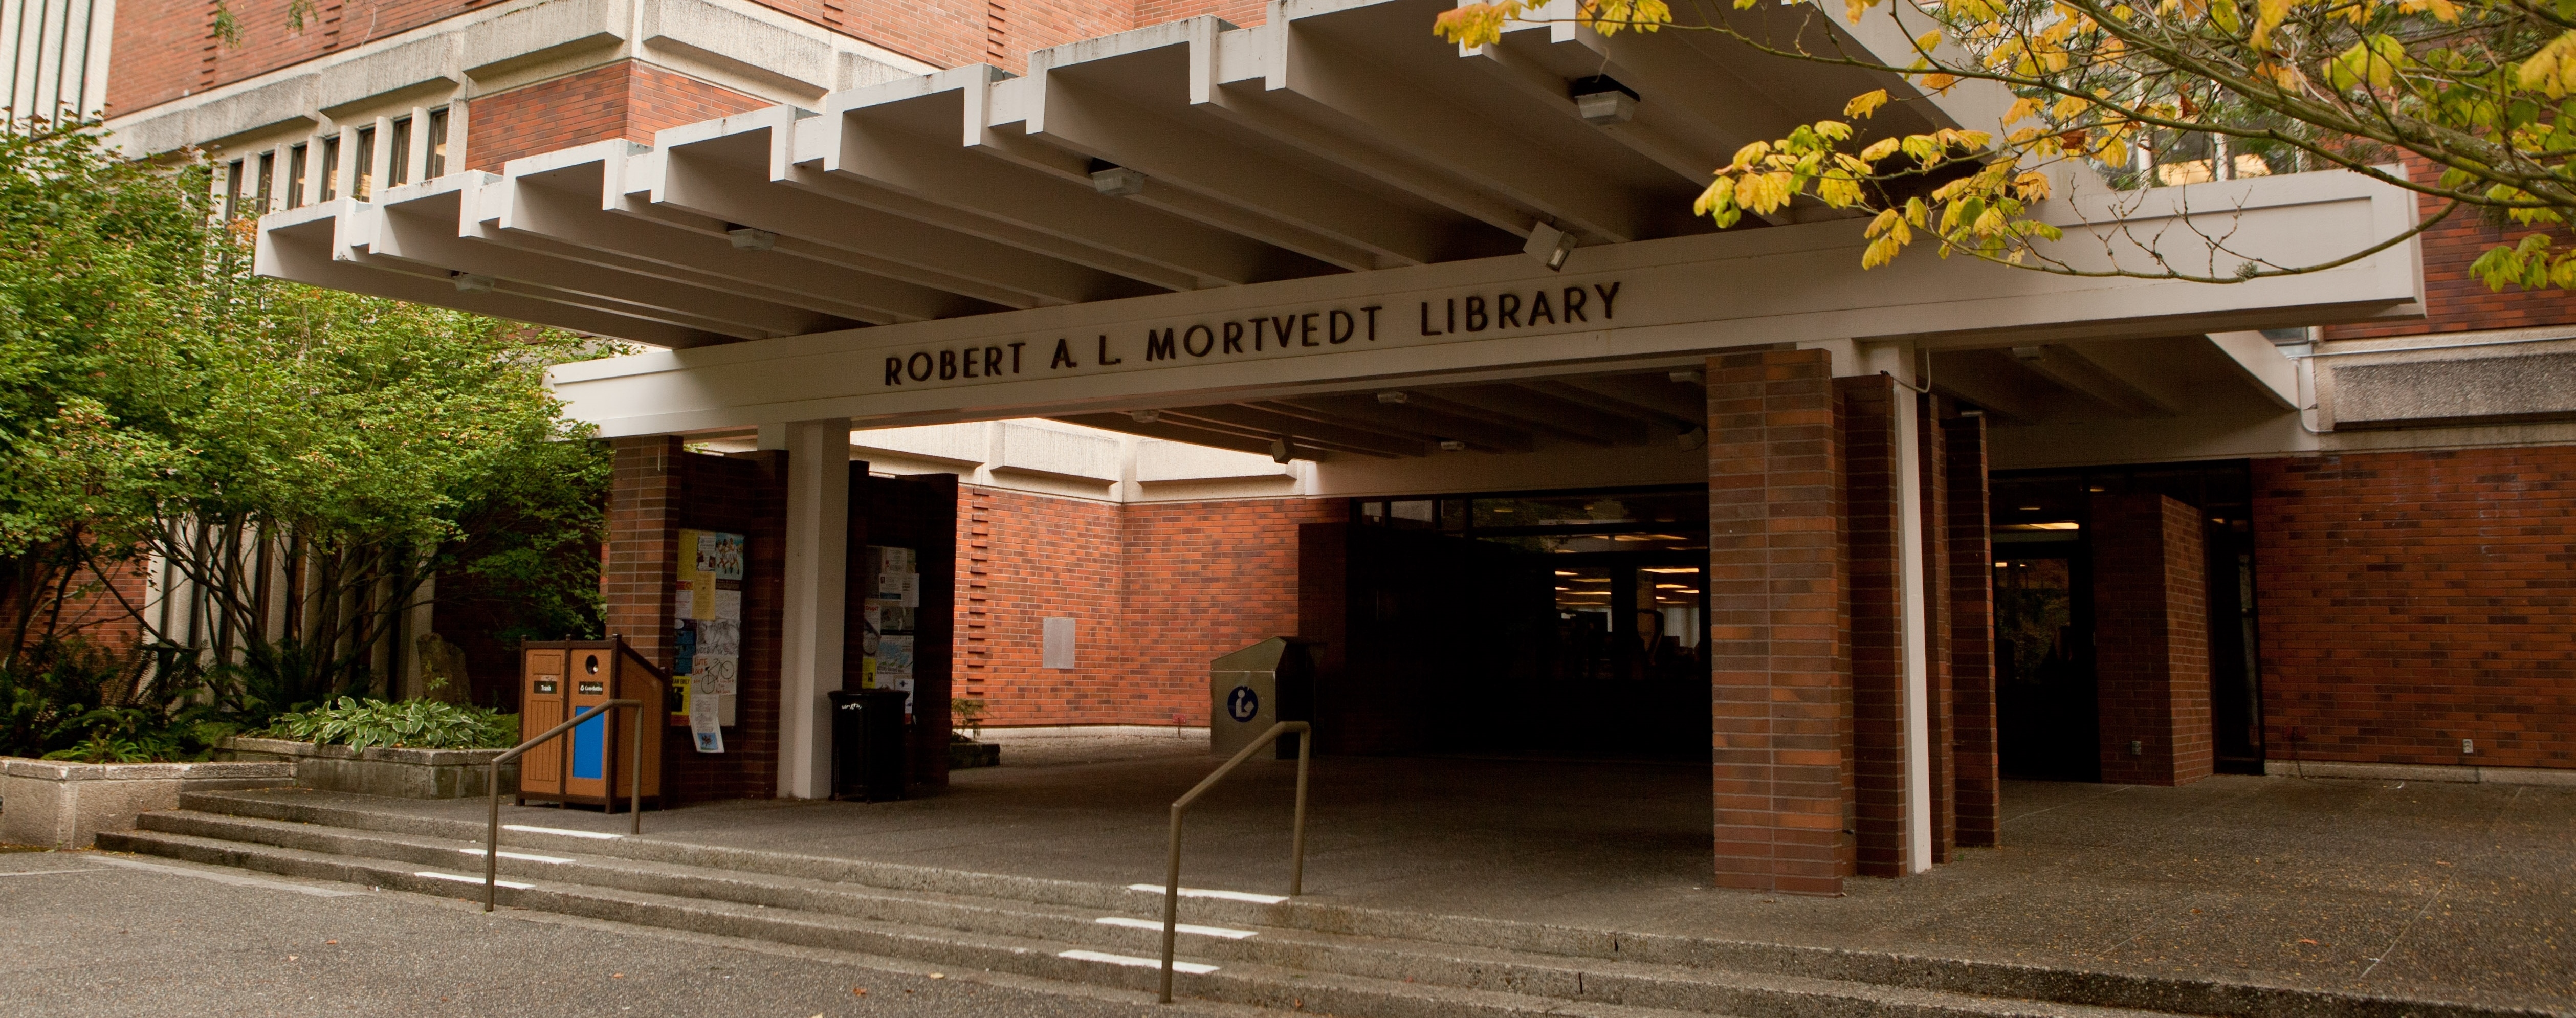 Entrance to Mortvedt Library